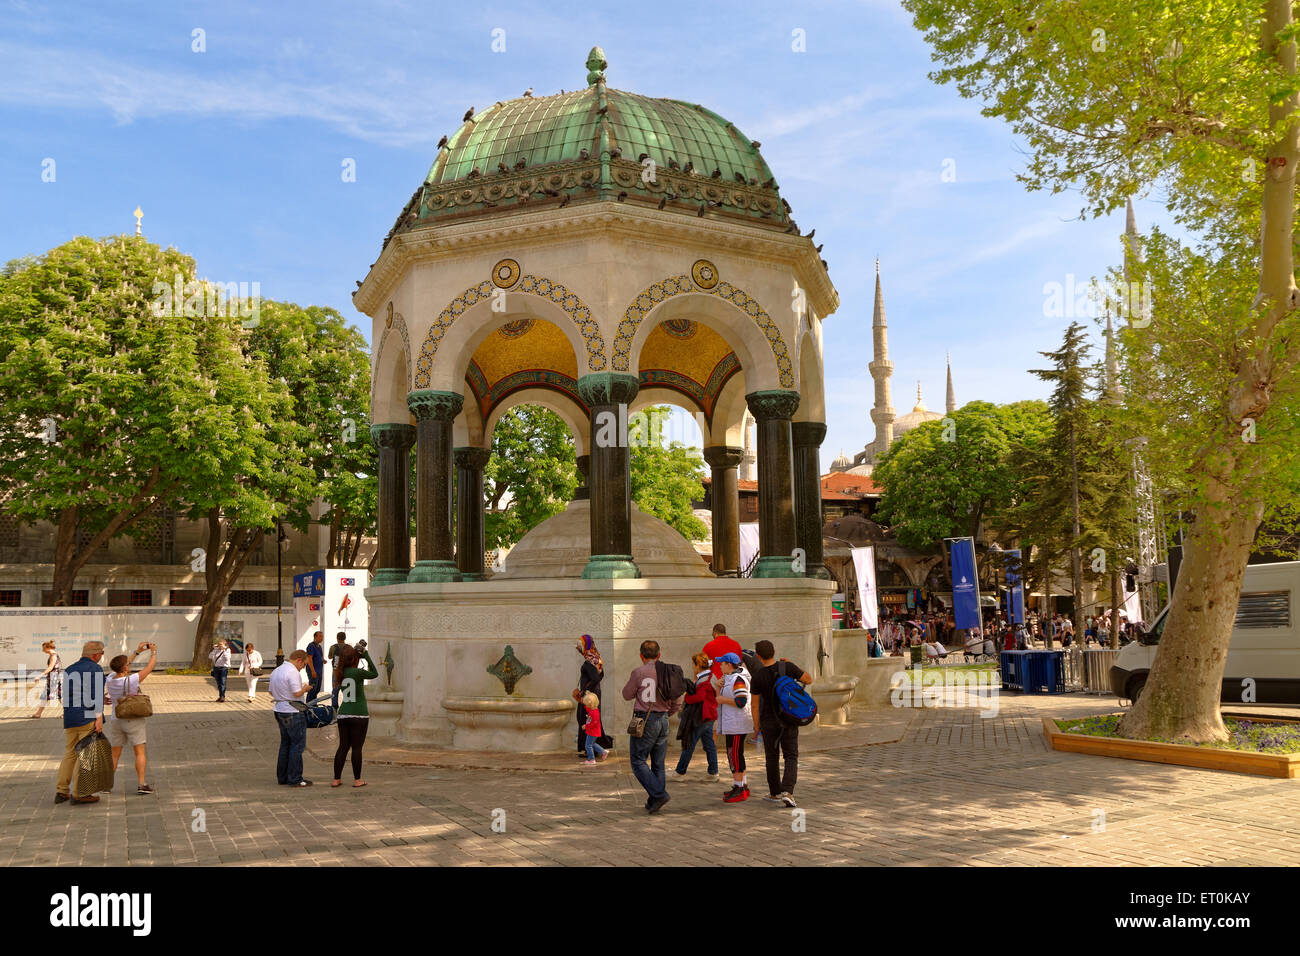 The German Fountain, Sultanahmet Square, Istanbul, Turkey. Stock Photo